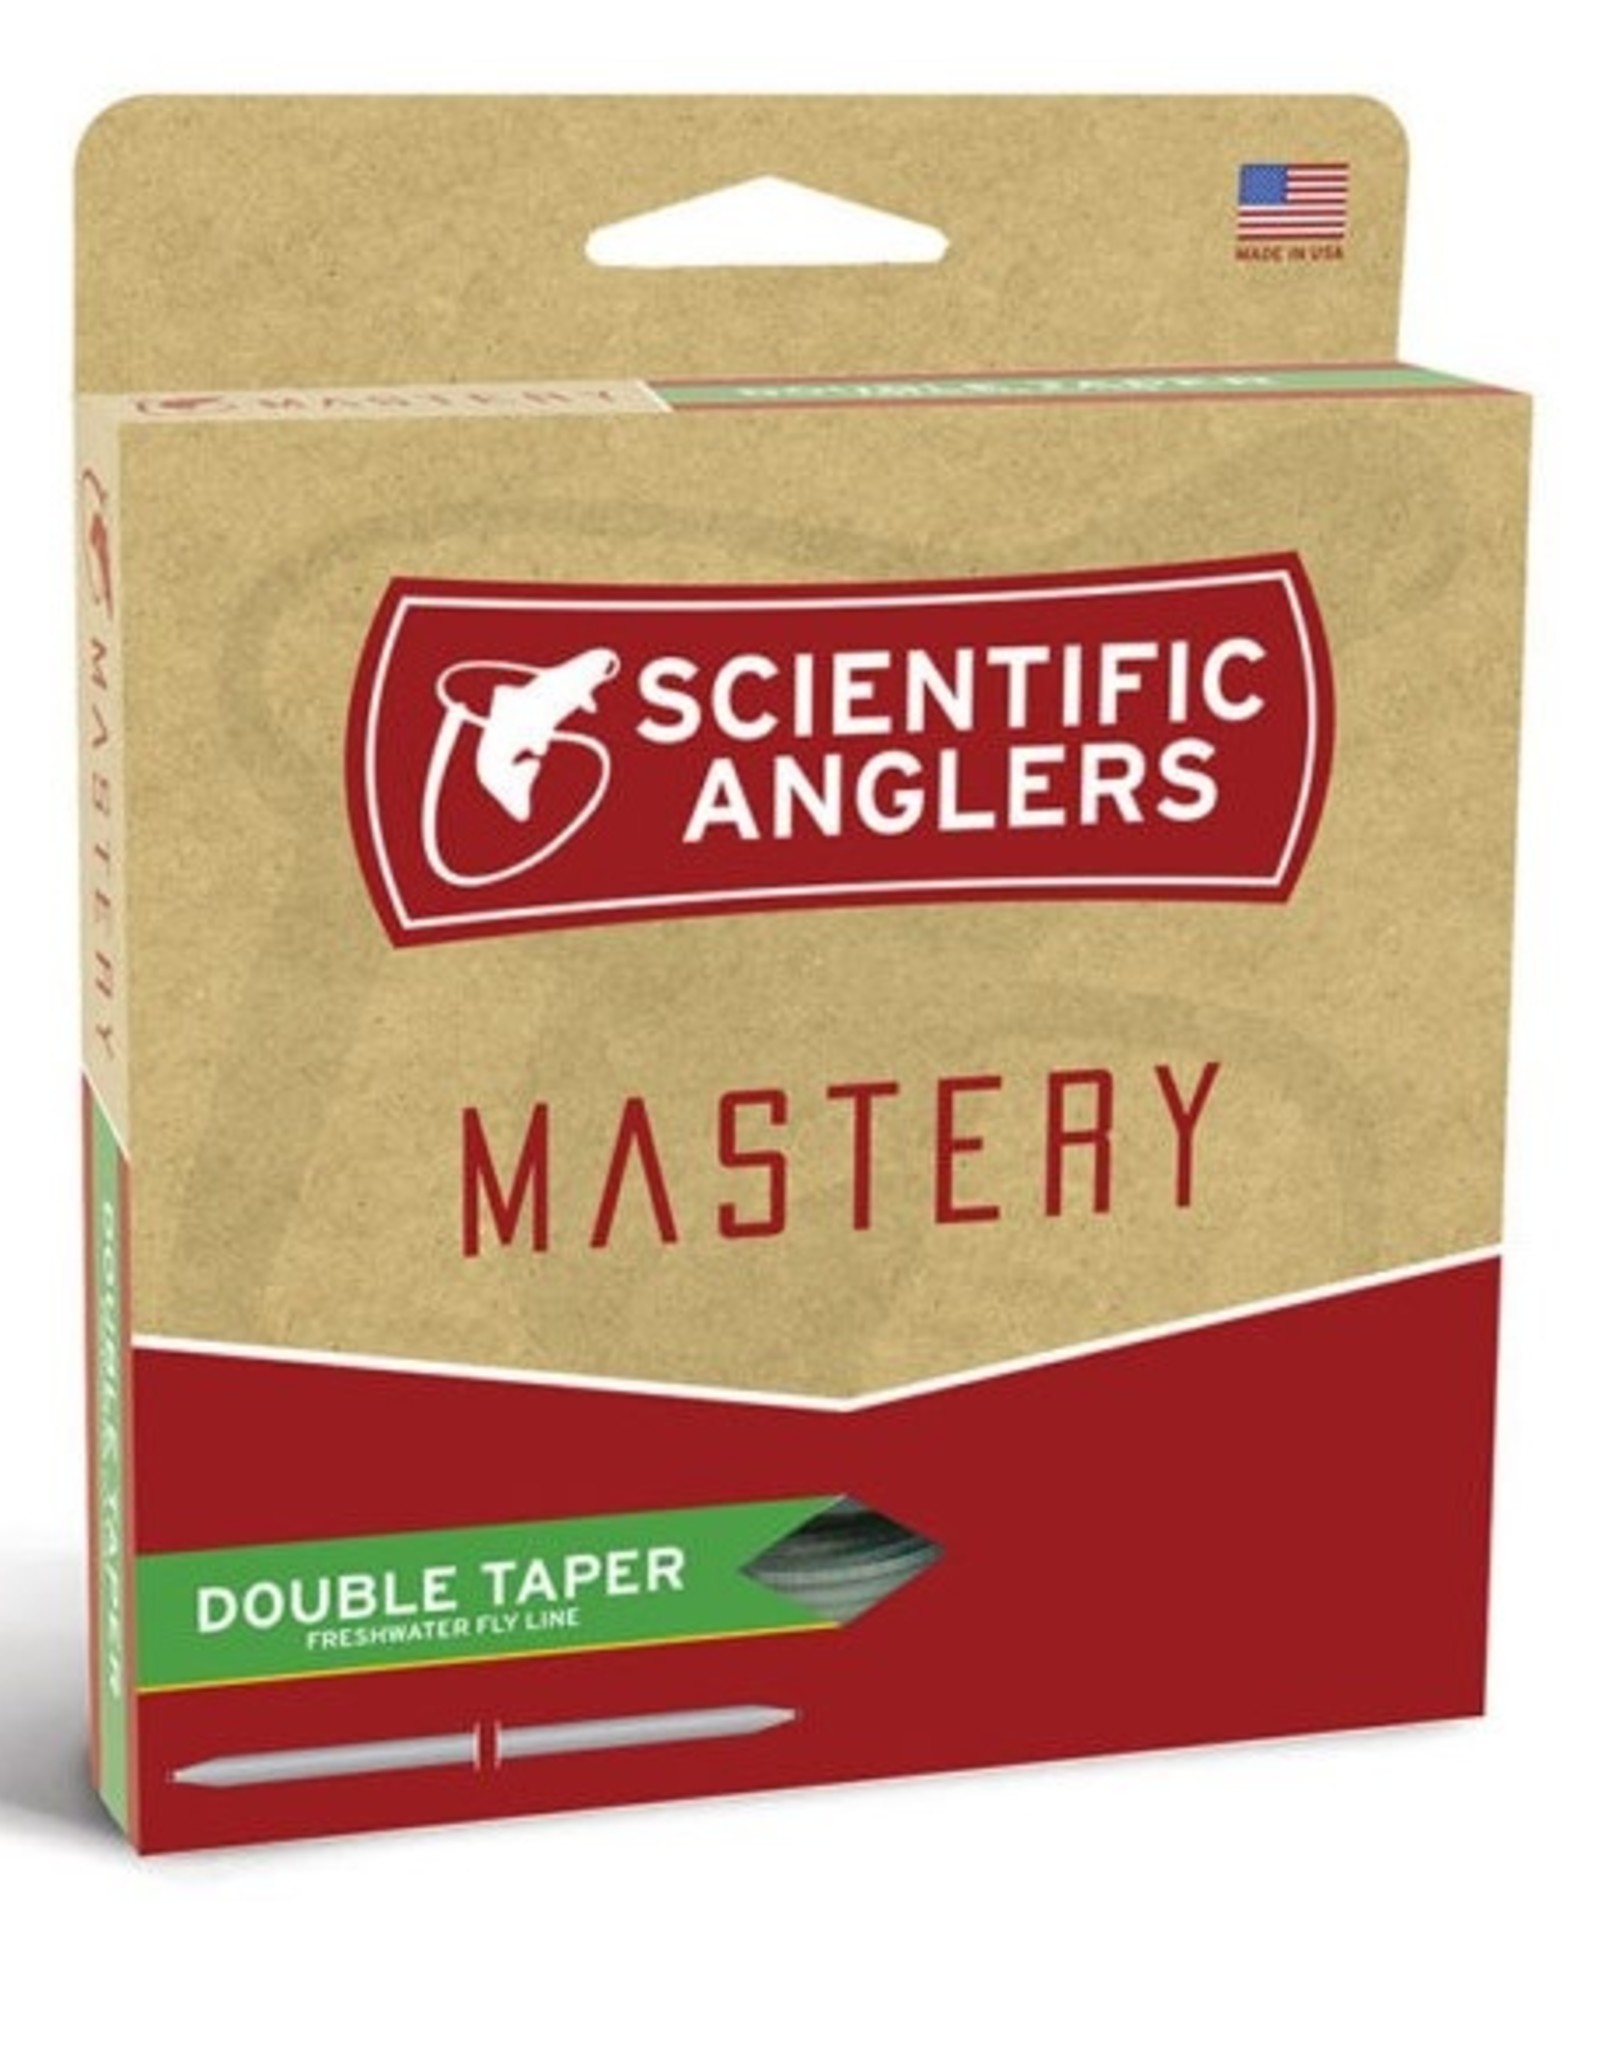 SCIENTIFIC ANGLERS MASTERY DOUBLE TAPER